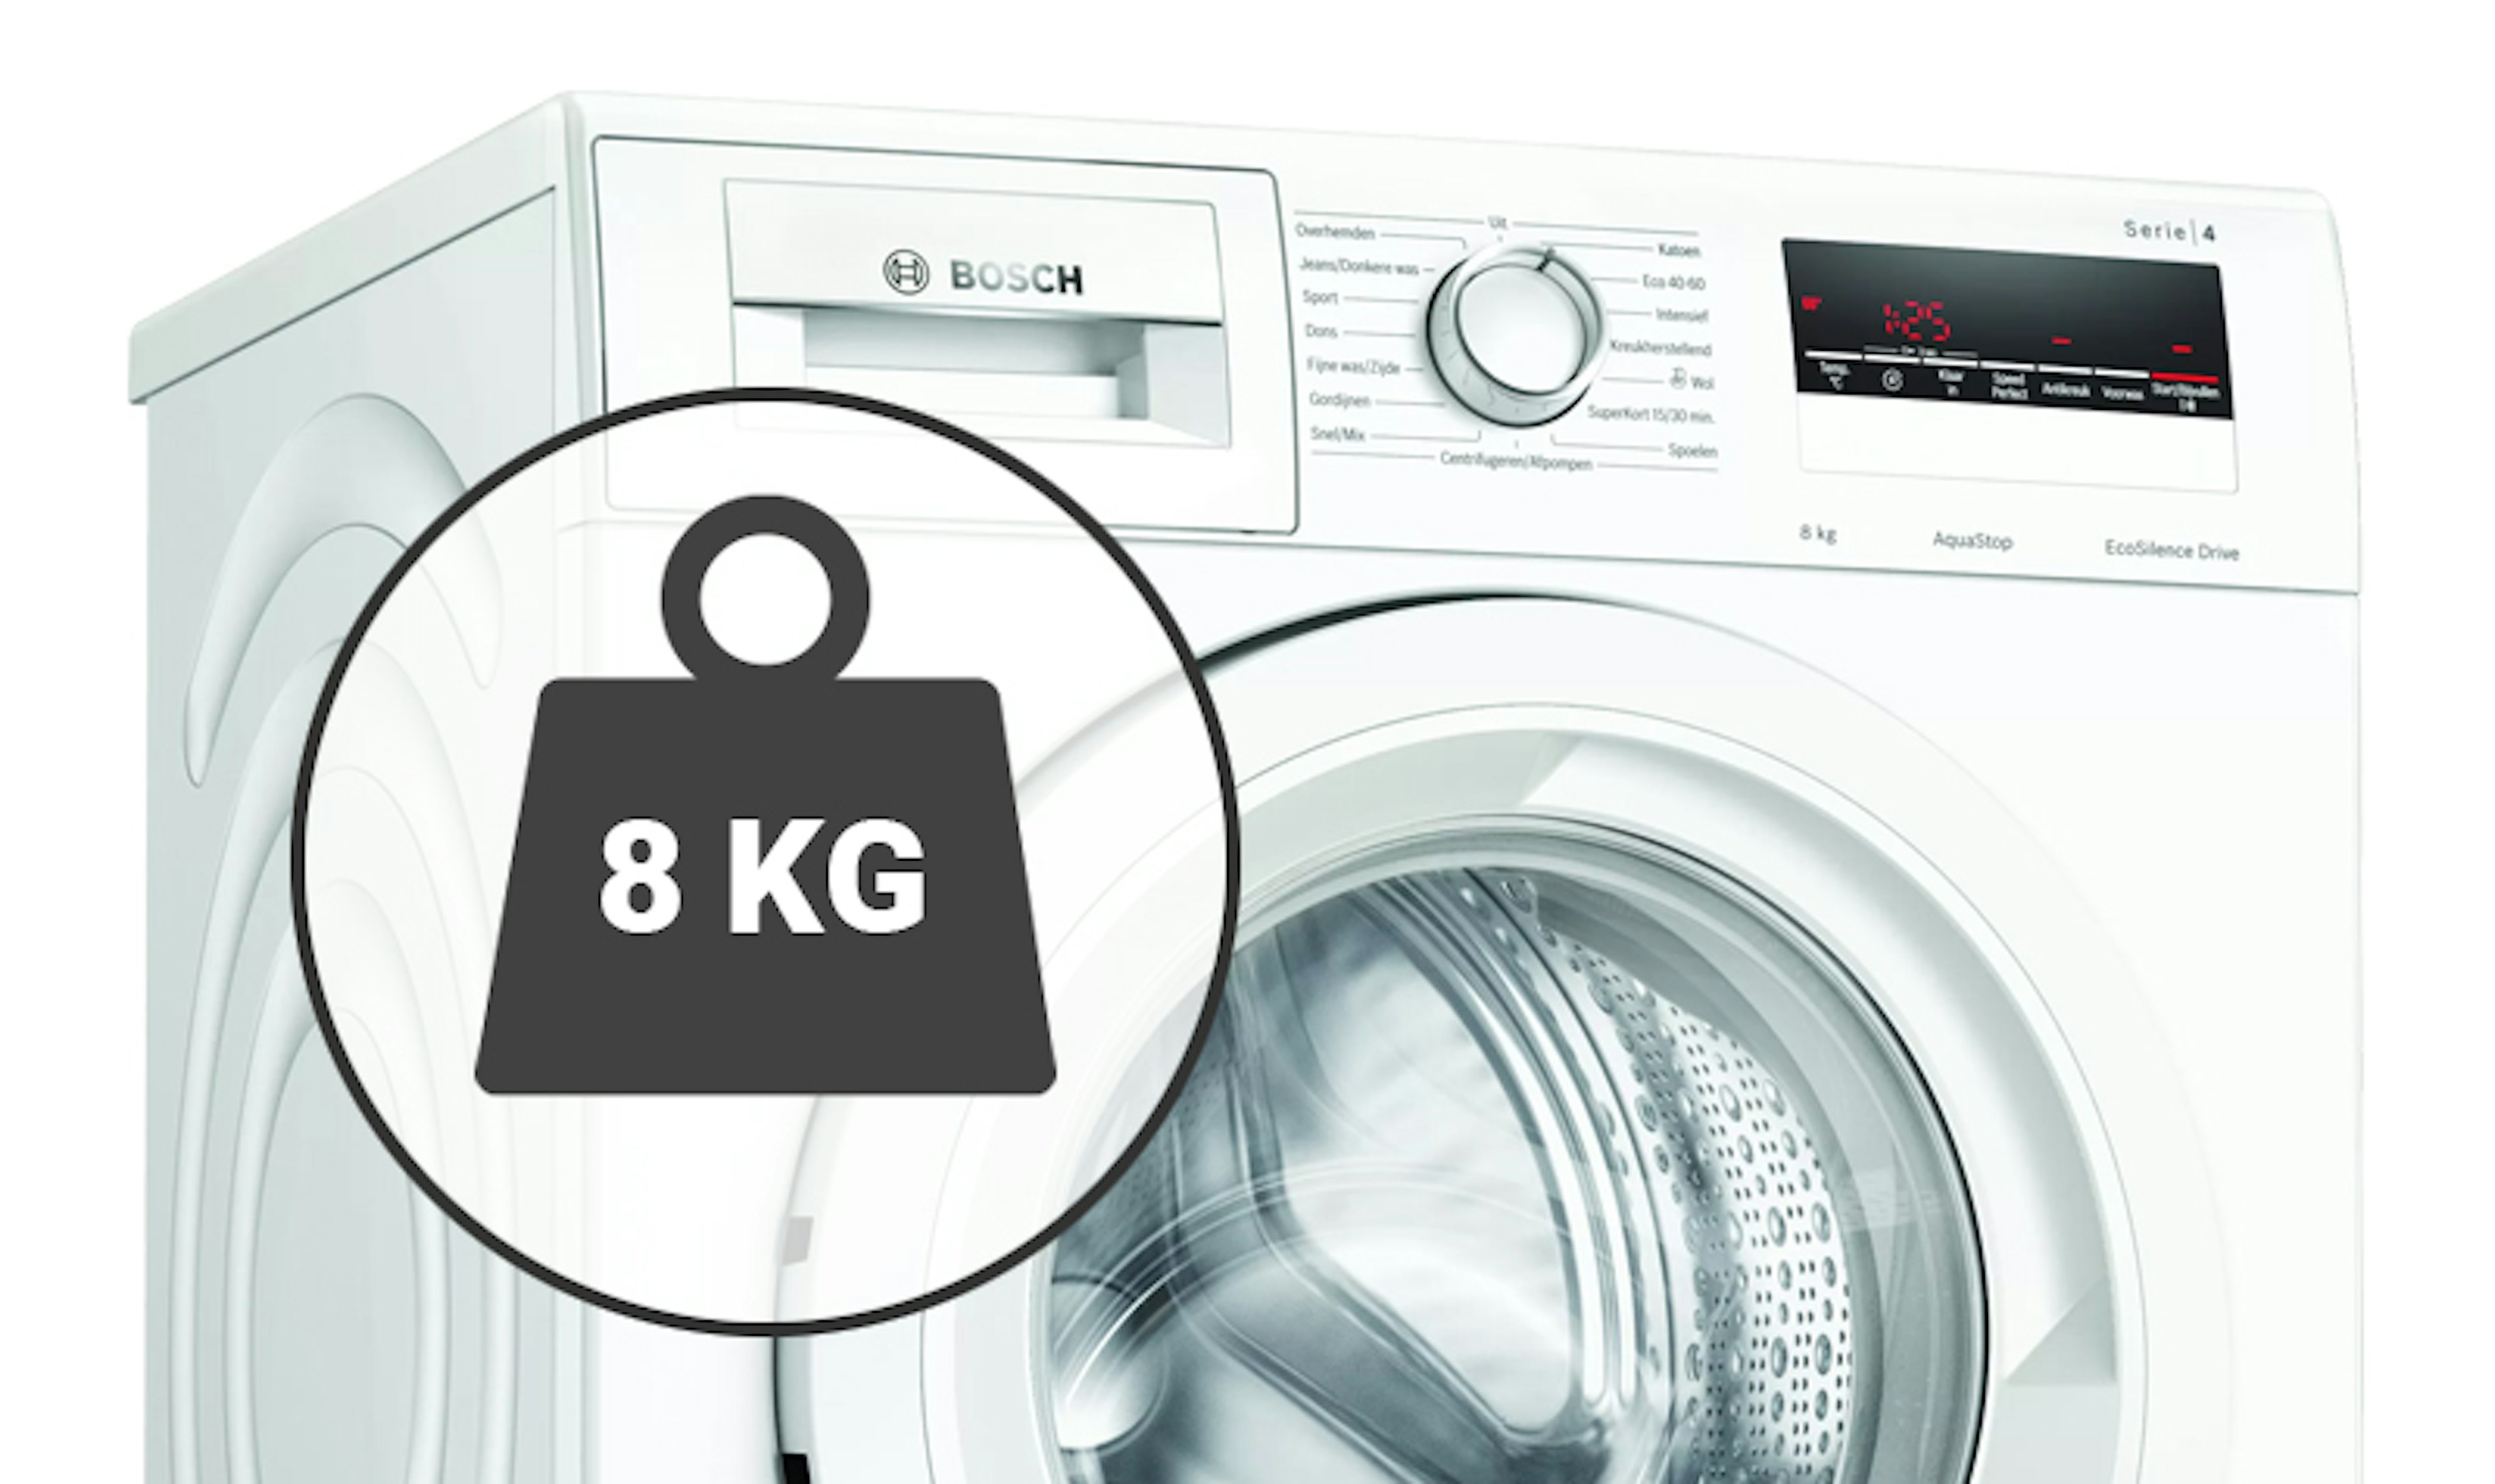 Mount Bank in de rij gaan staan keuken 7 kg wasmachine kopen? | Bemmel & Kroon